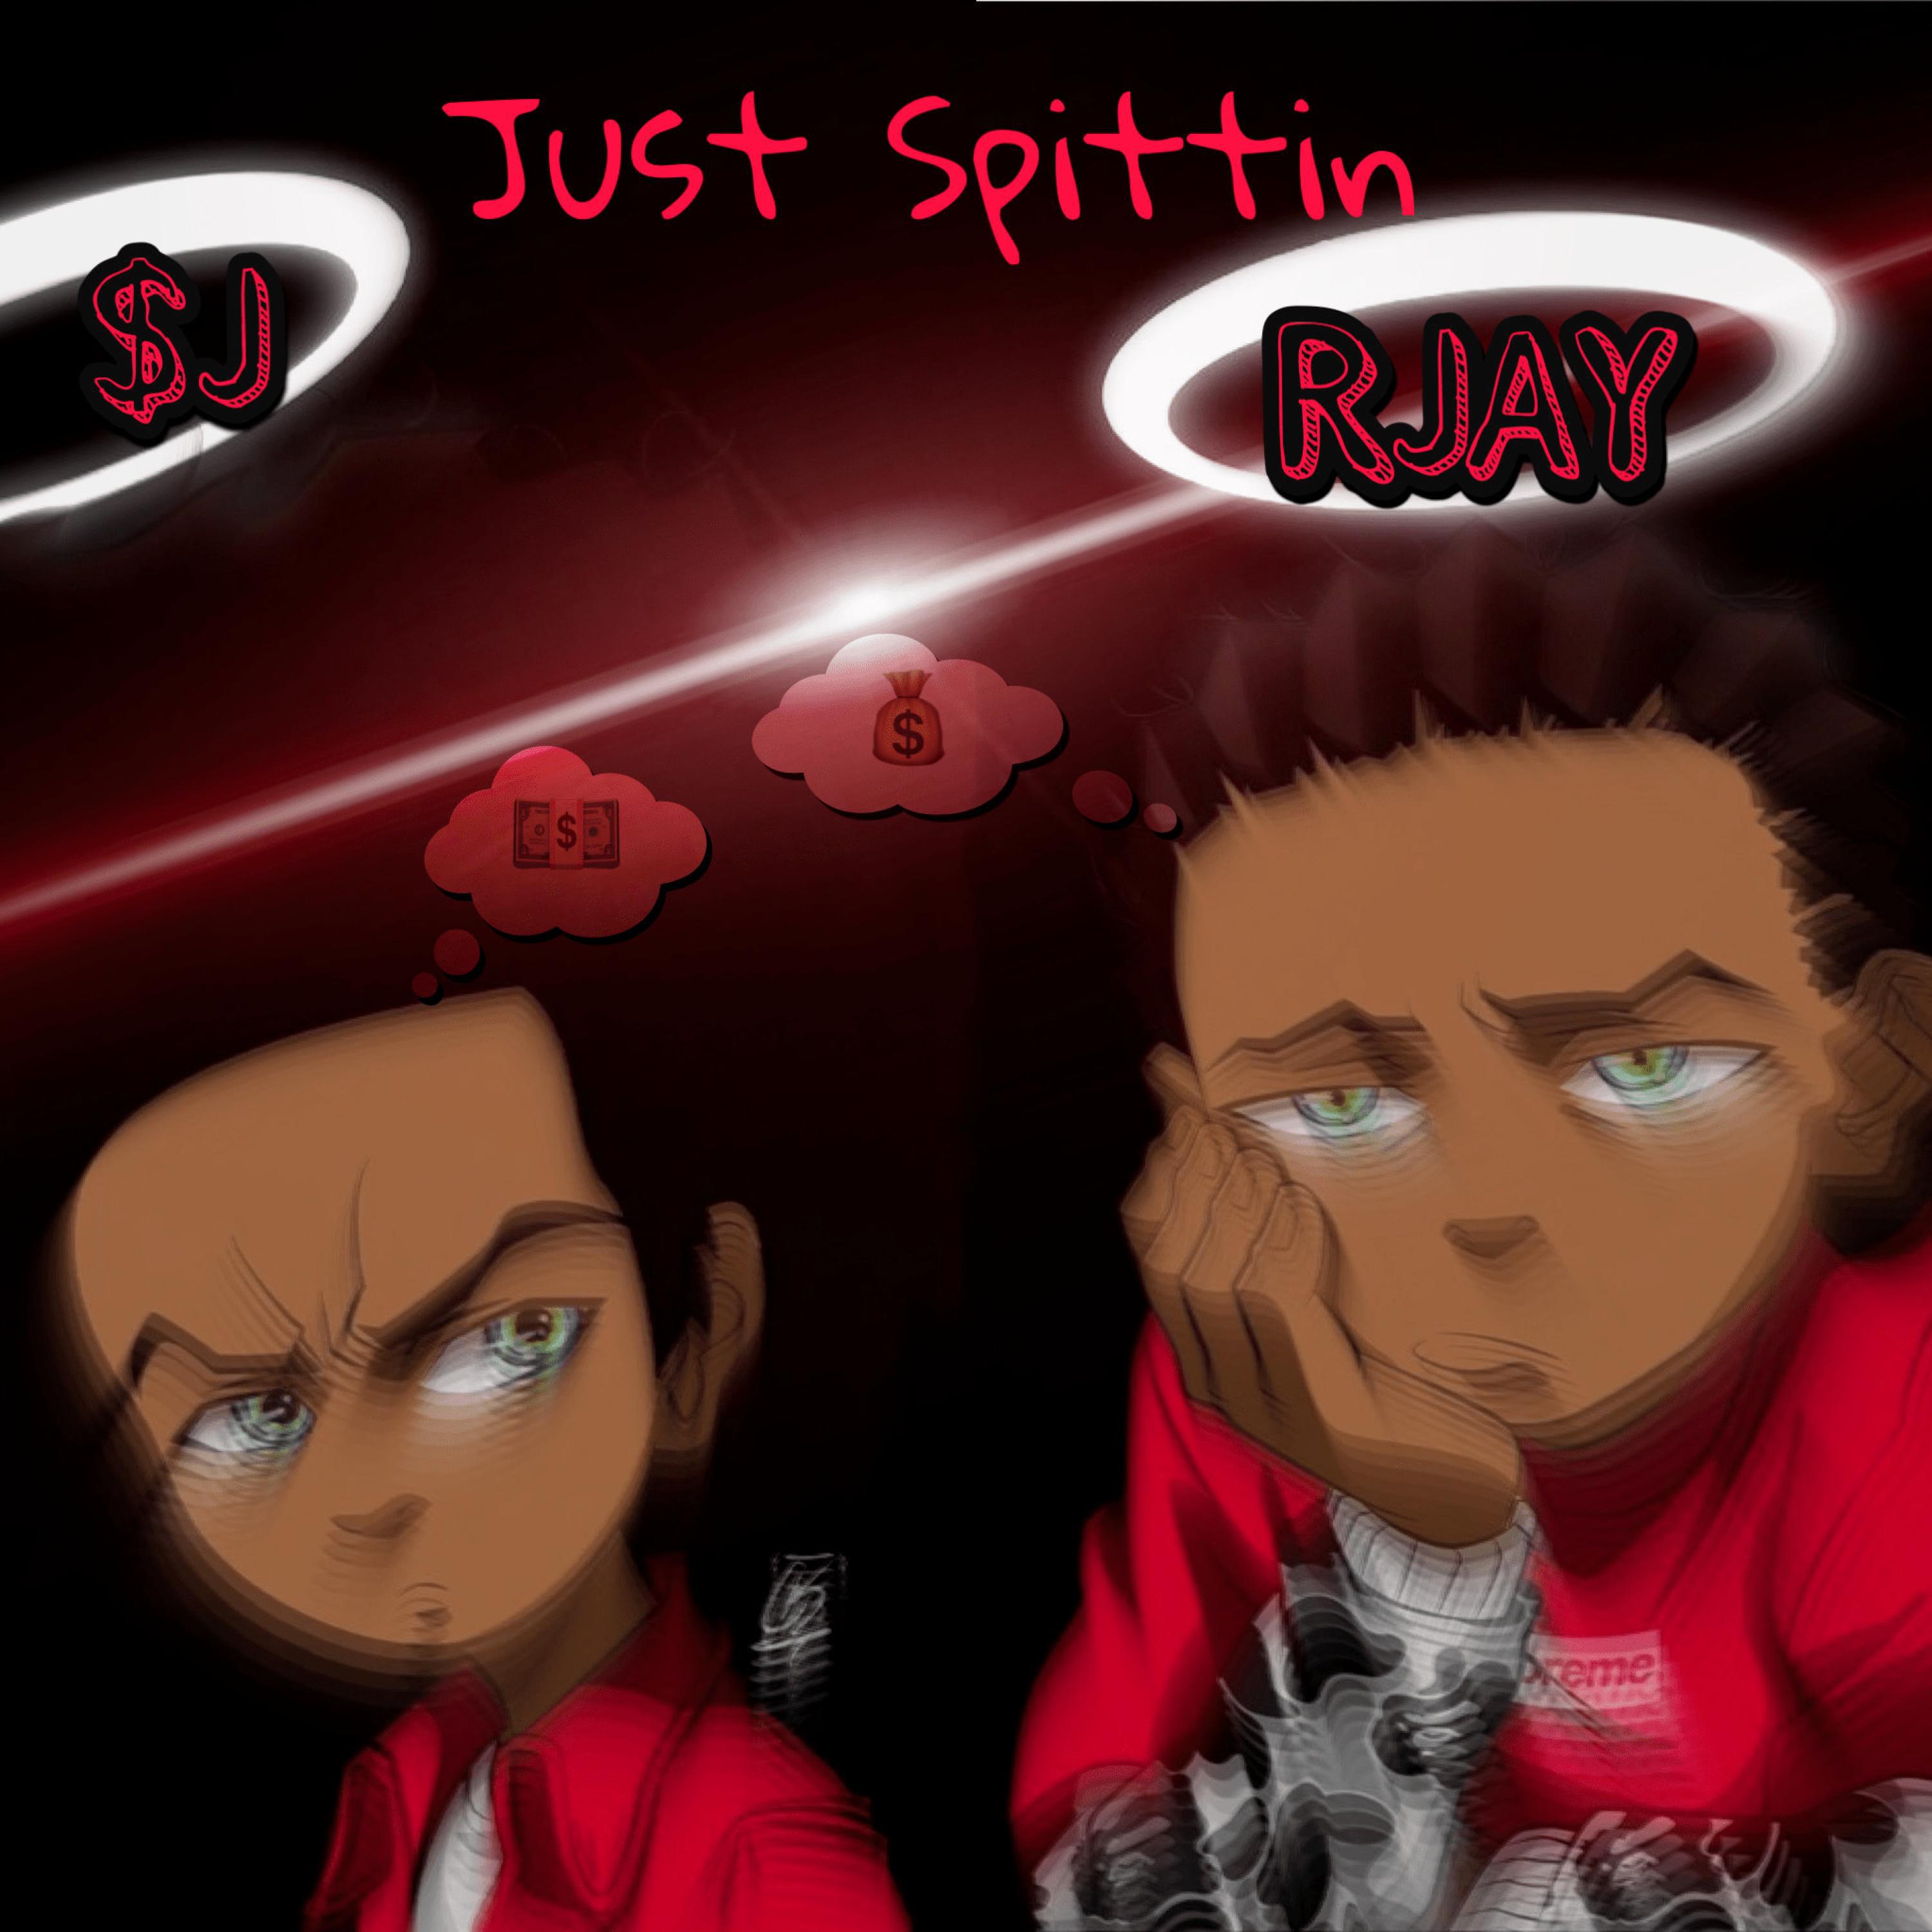 $j - Just Spittin' (feat. R-Jay)